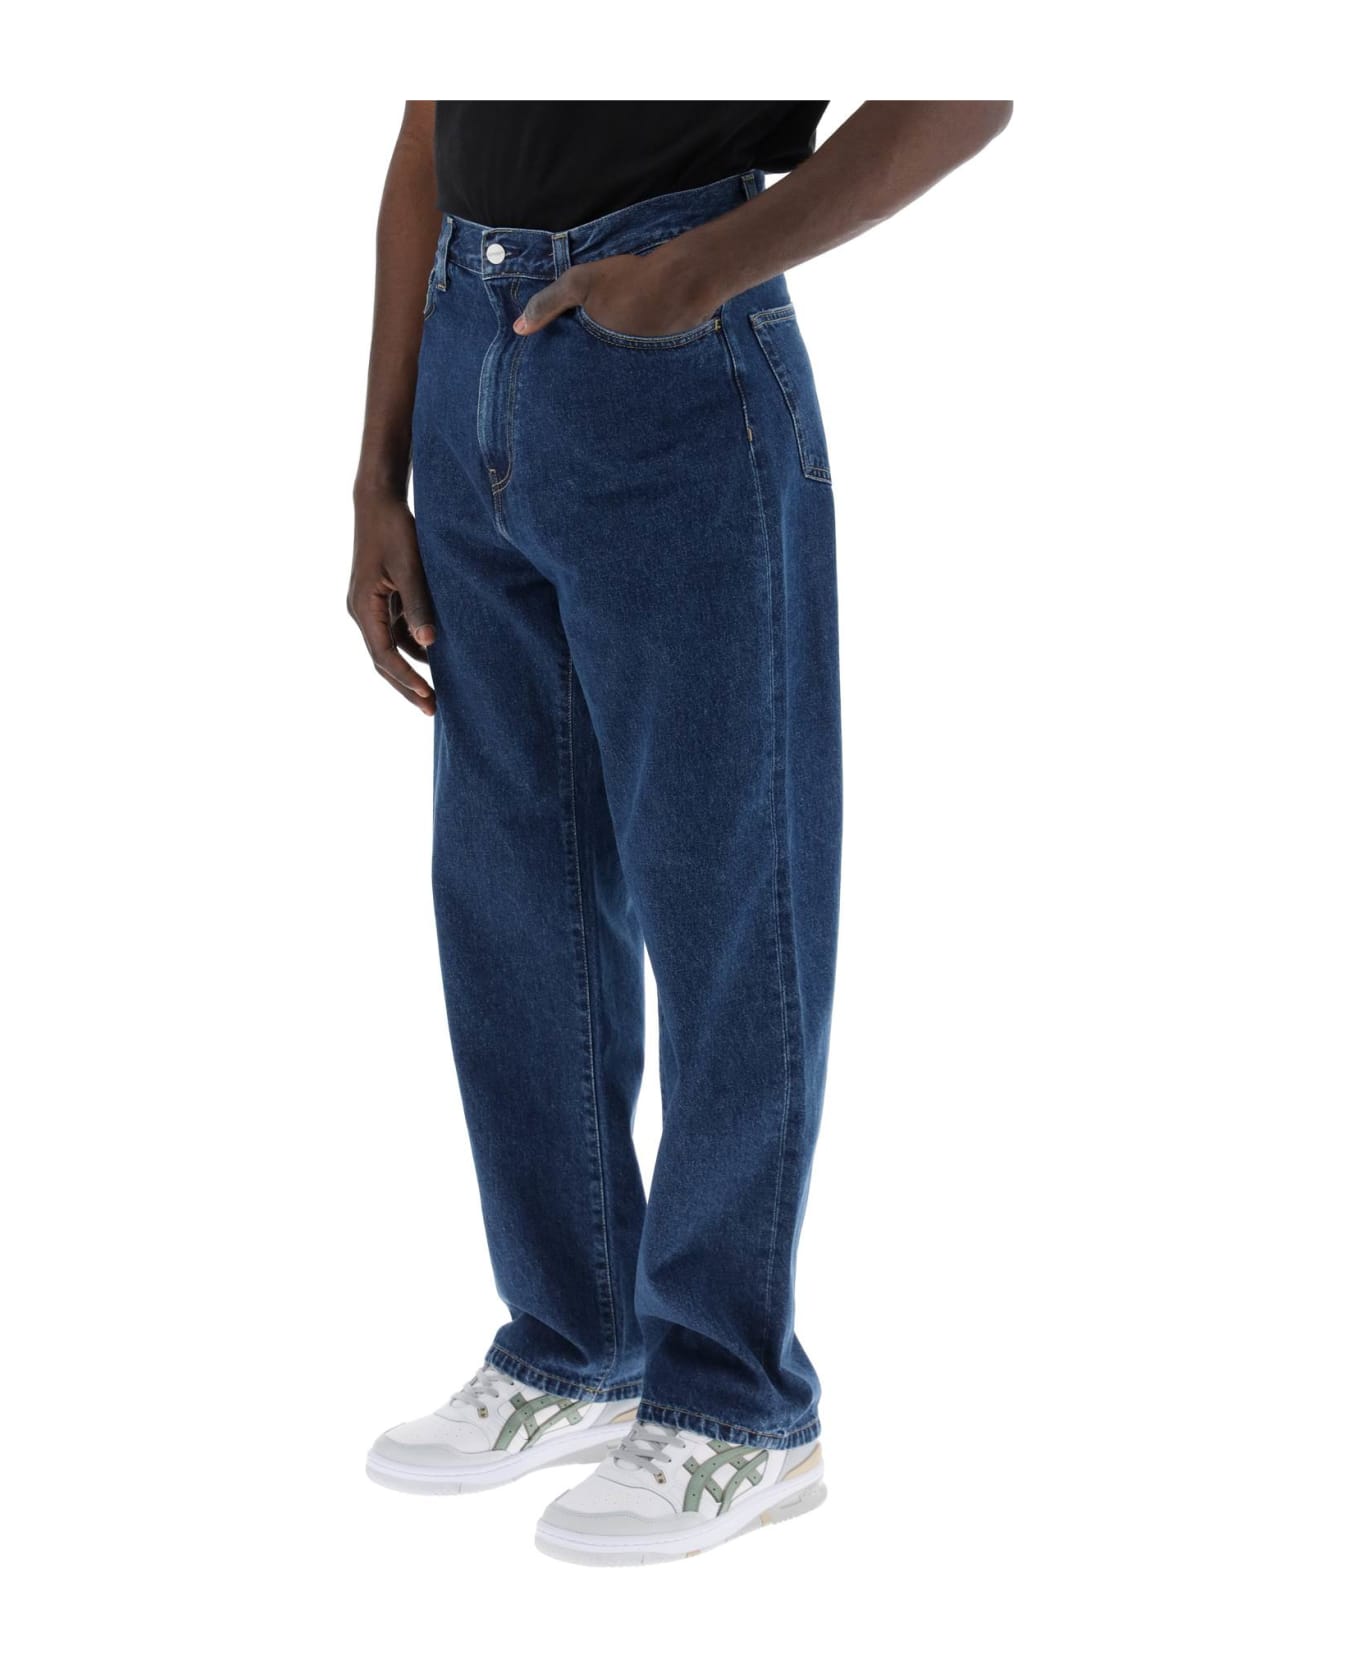 Carhartt Landon Denim Jeans - BLUE HEAVY STONE WASH デニム